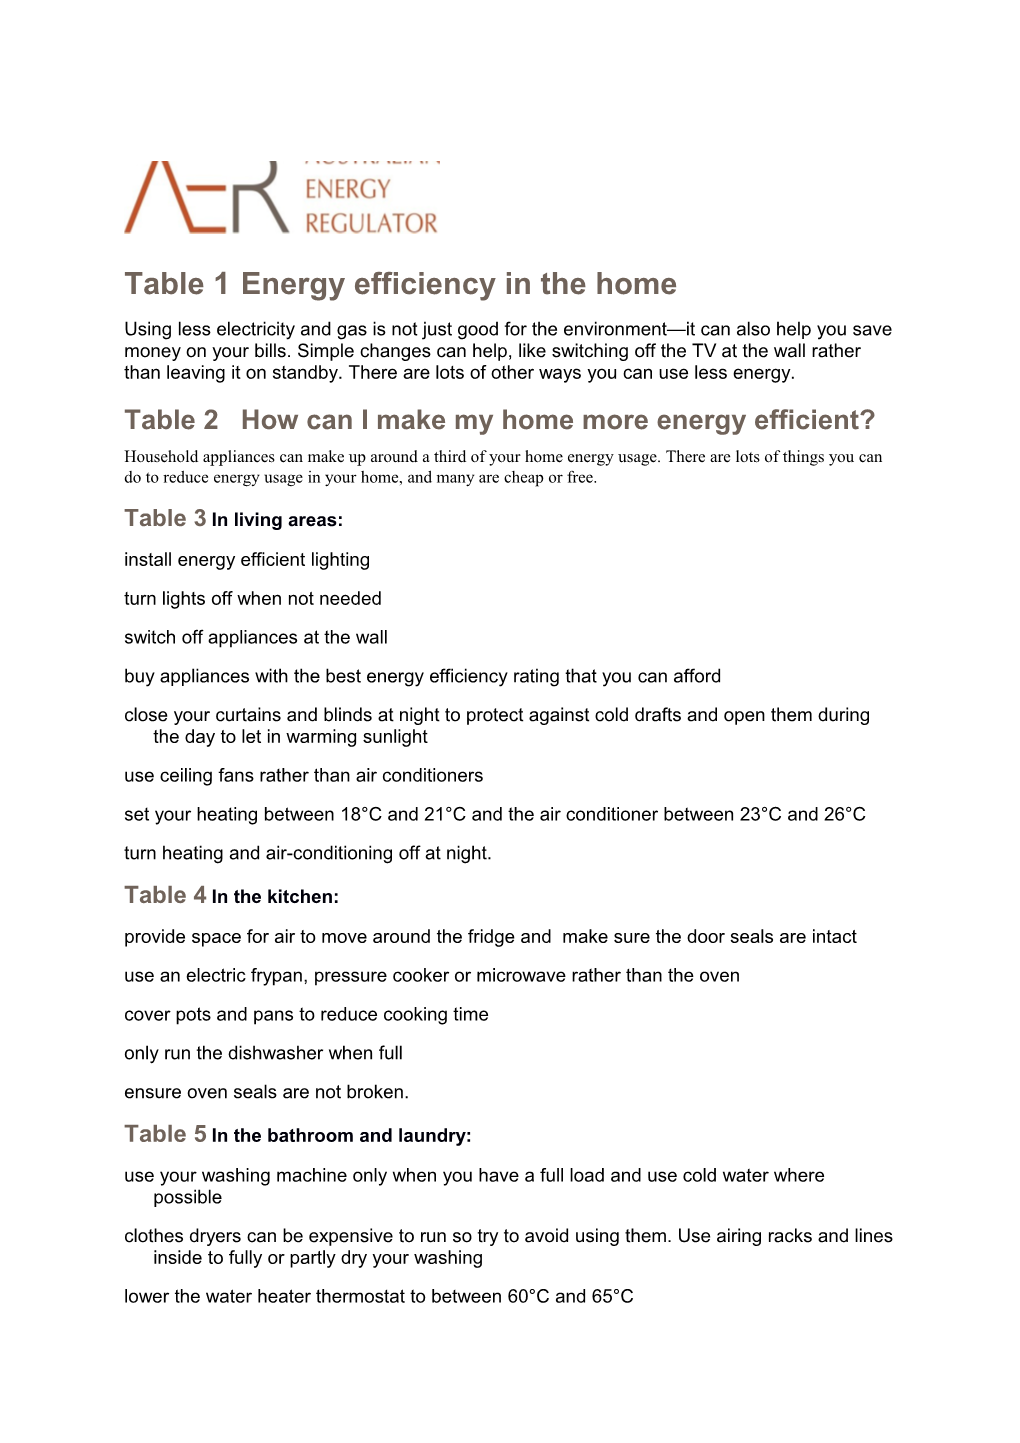 Energy Efficiency in the Home